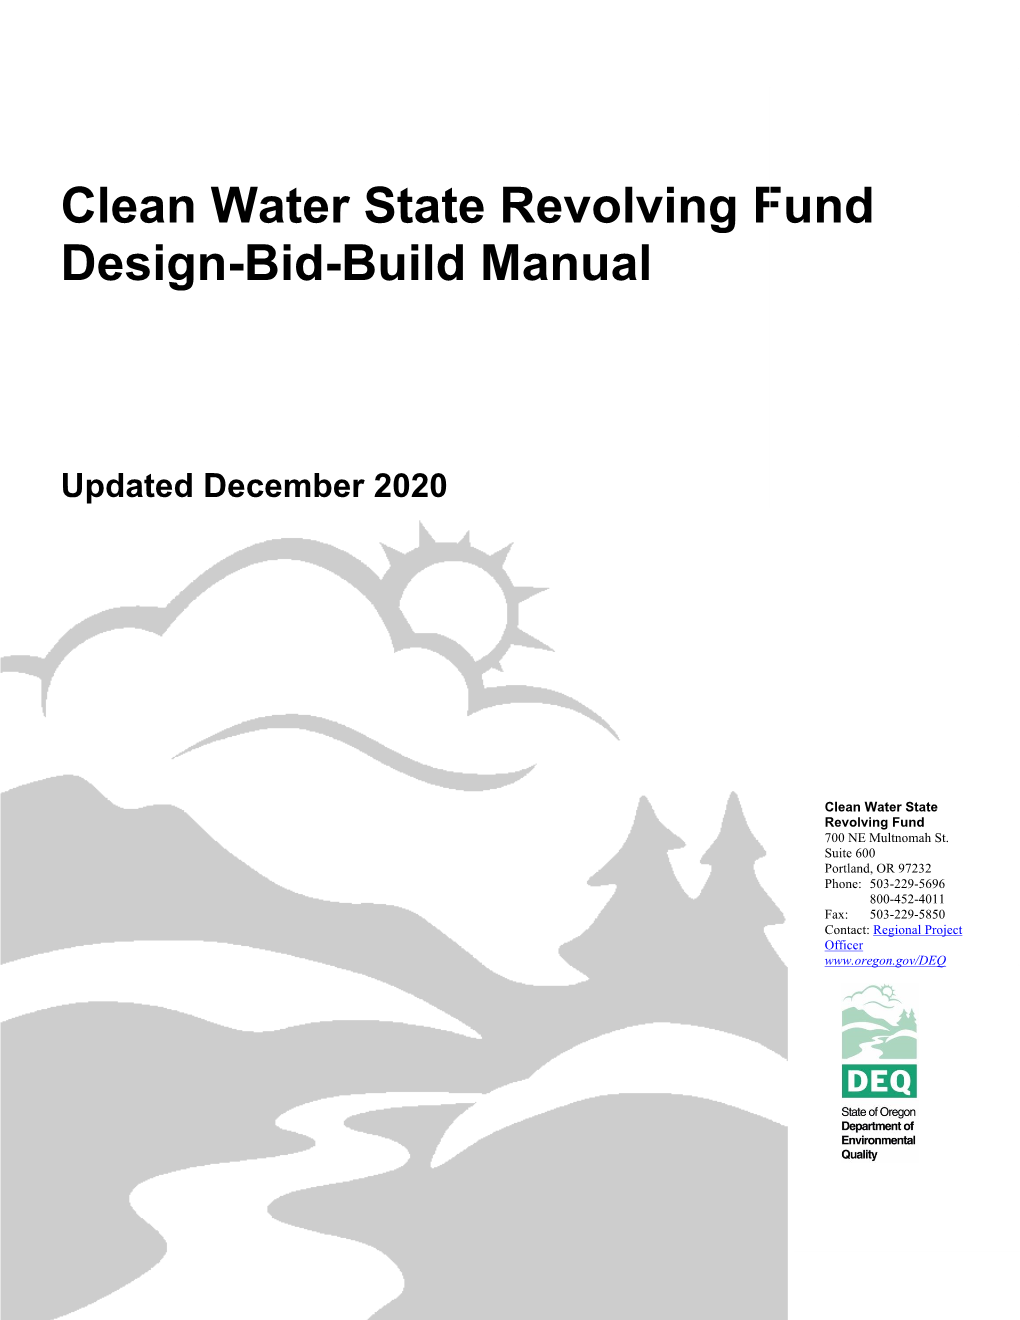 Clean Water State Revolving Fund Design-Bid-Build Manual